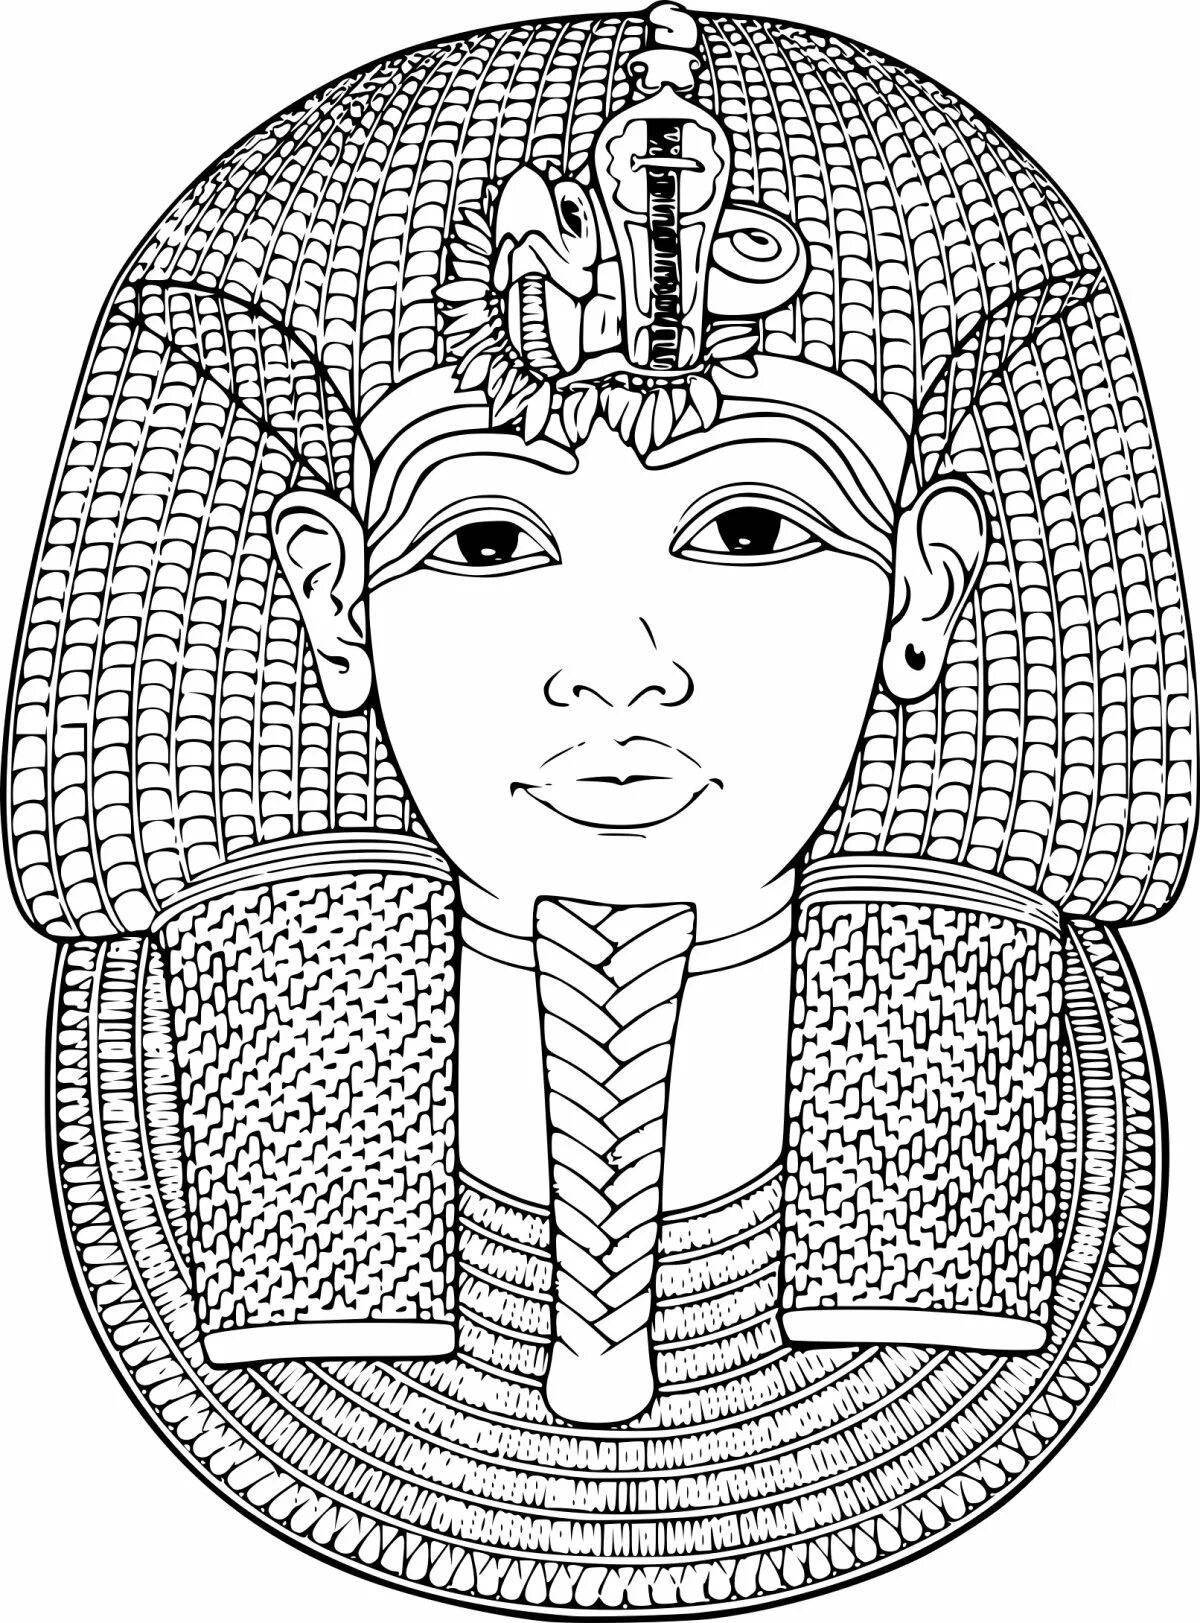 Pharaoh of ancient Egypt #2